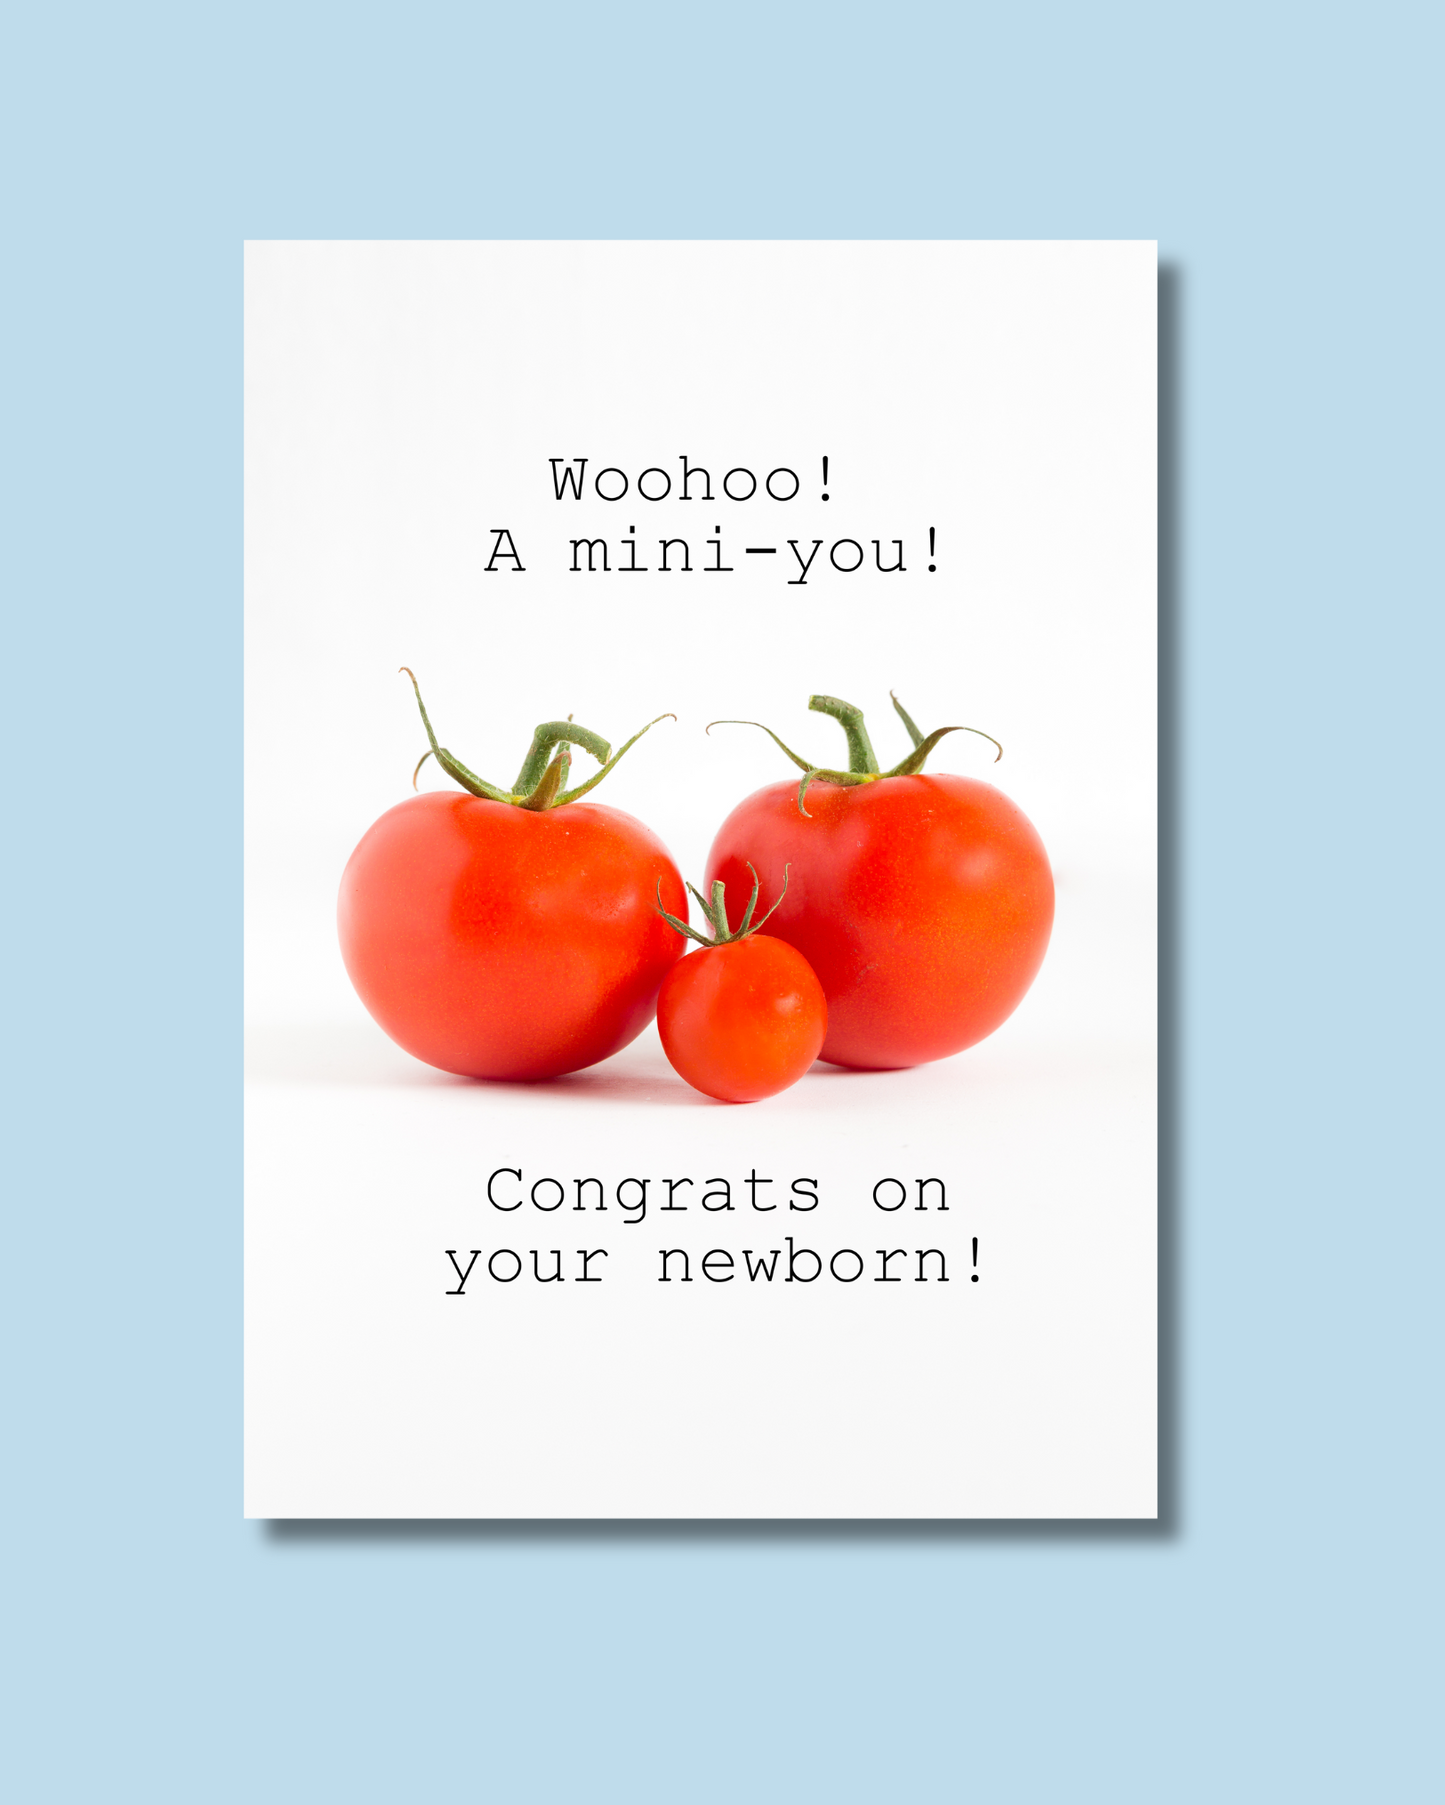 Woohoo! A mini-you! Congrats on your newborn!